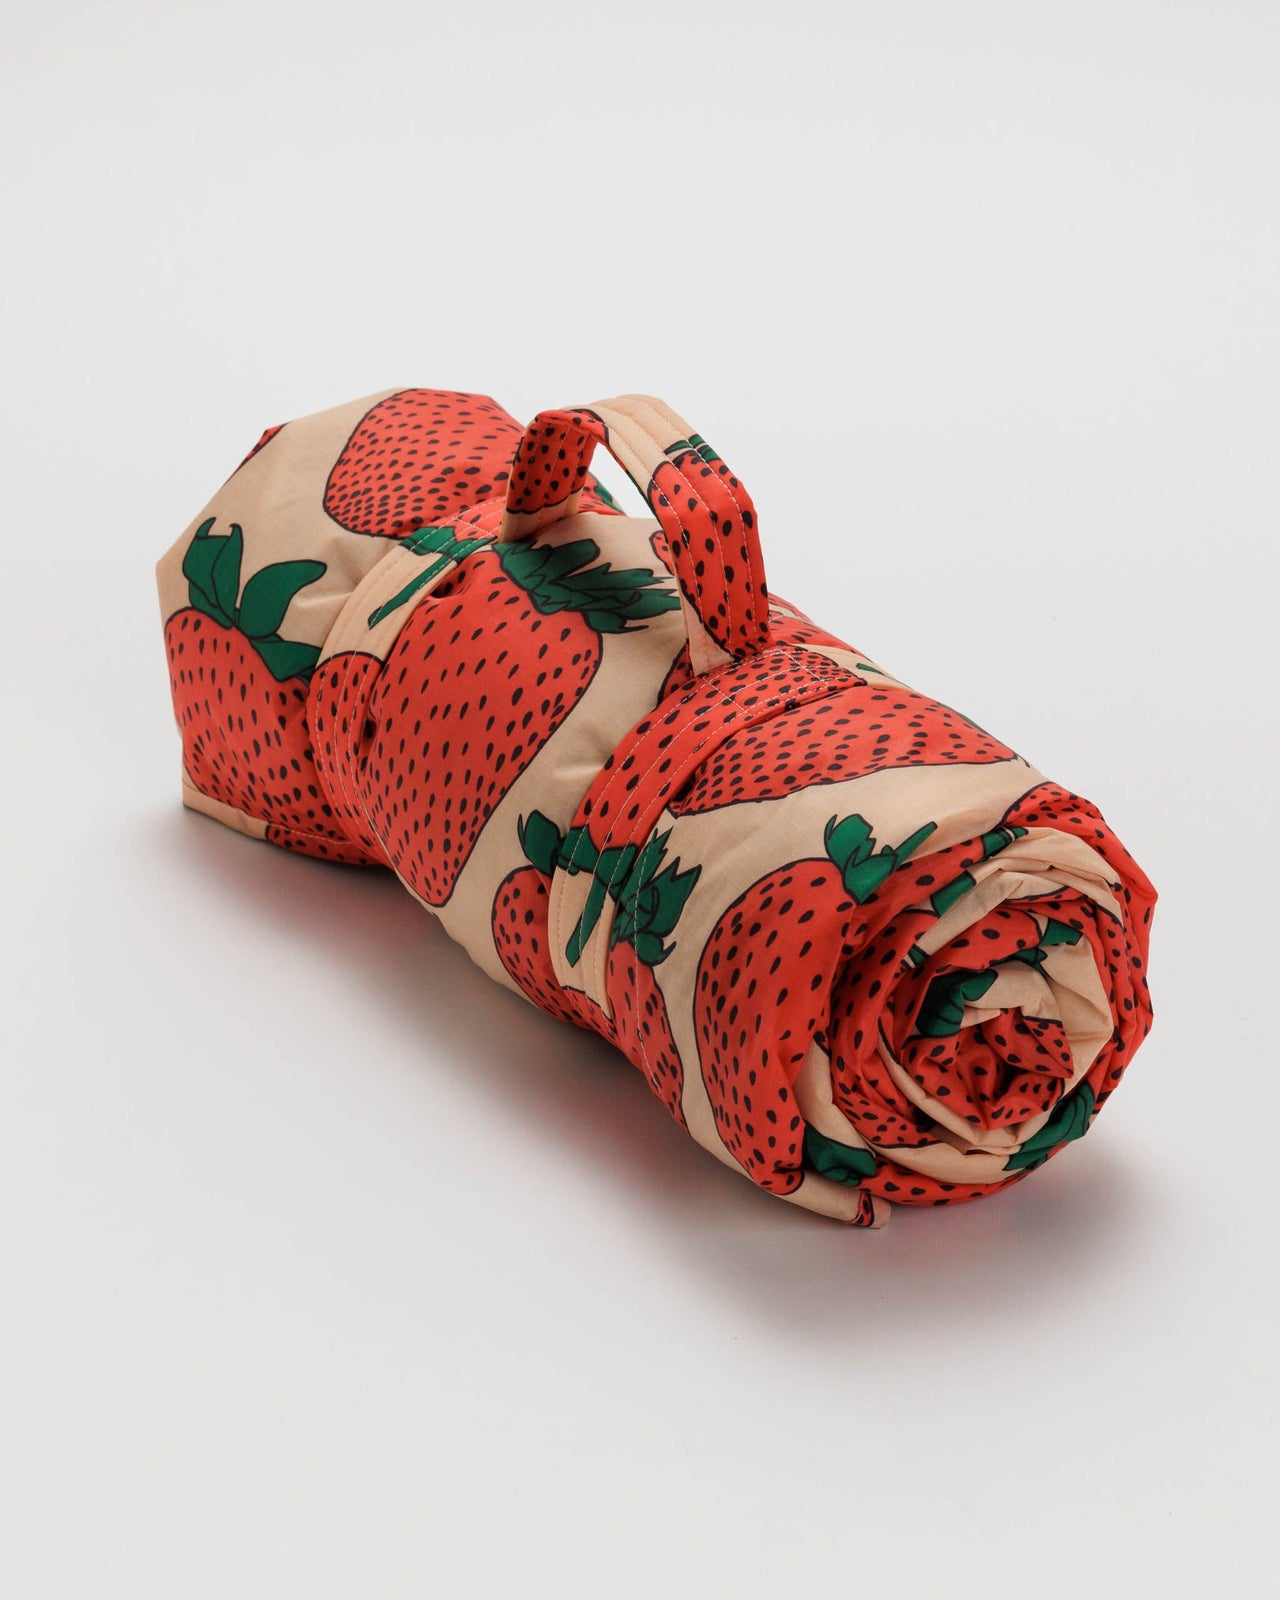 Puffy Picnic Blanket - Strawberry